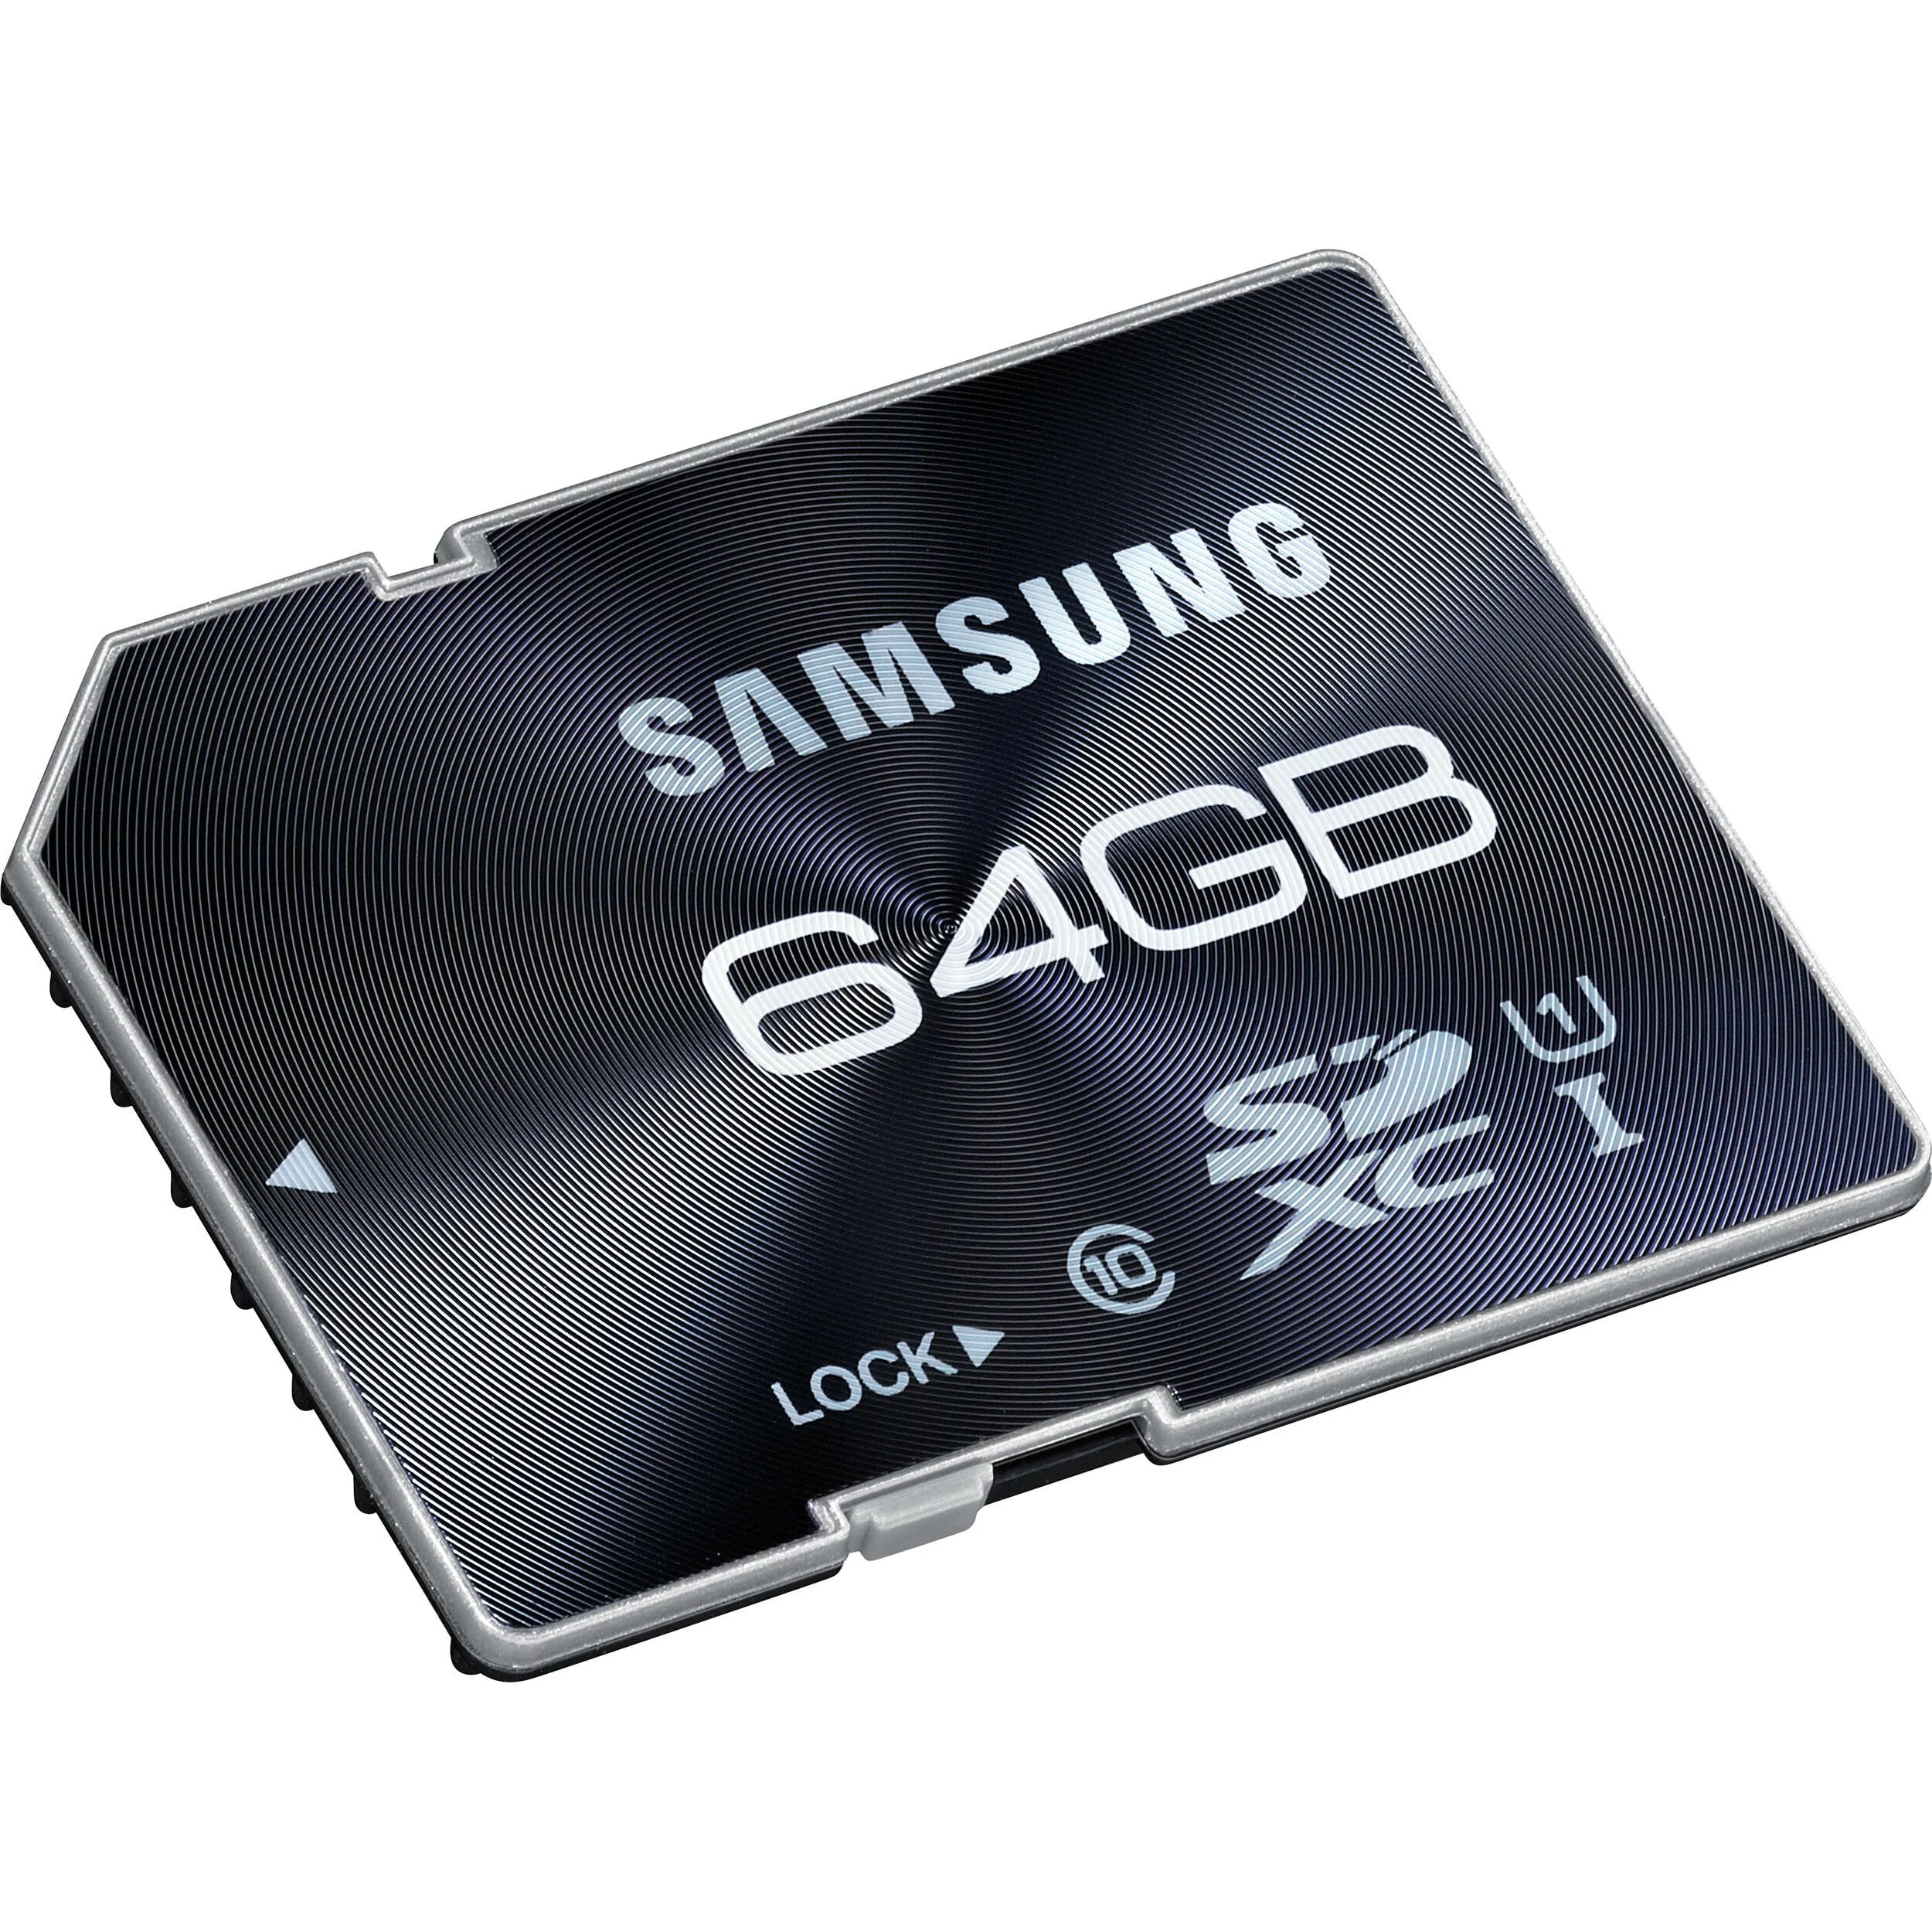 Samsung память 64 гб. Samsung SD Card. SD Card 64 GB. СД карта 32 самсунг SDHC. Карта памяти 16 ГБ самсунг.